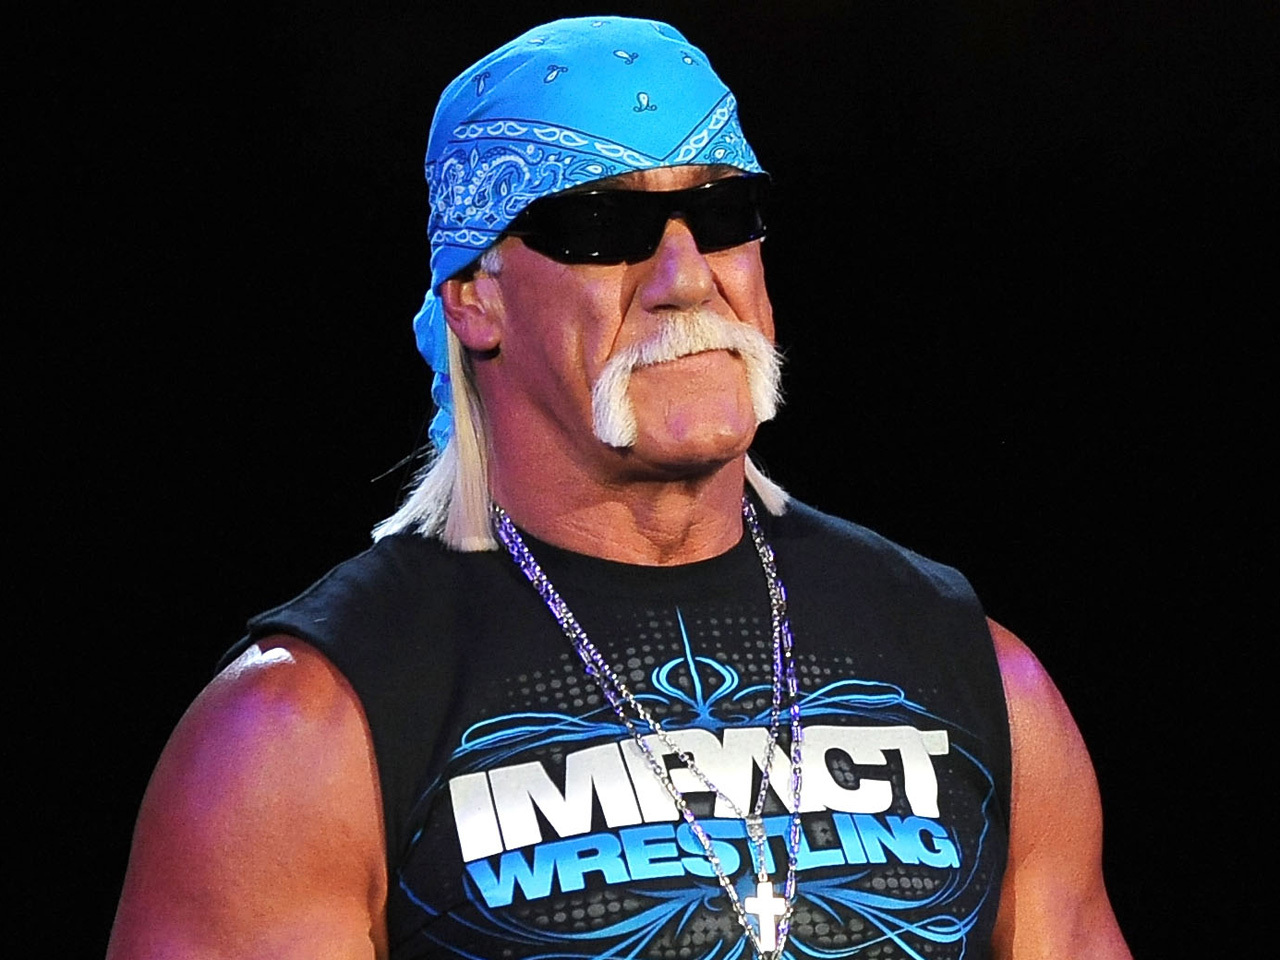 Hulk Hogan To File Lawsuits Over Sex Tape Cbs News